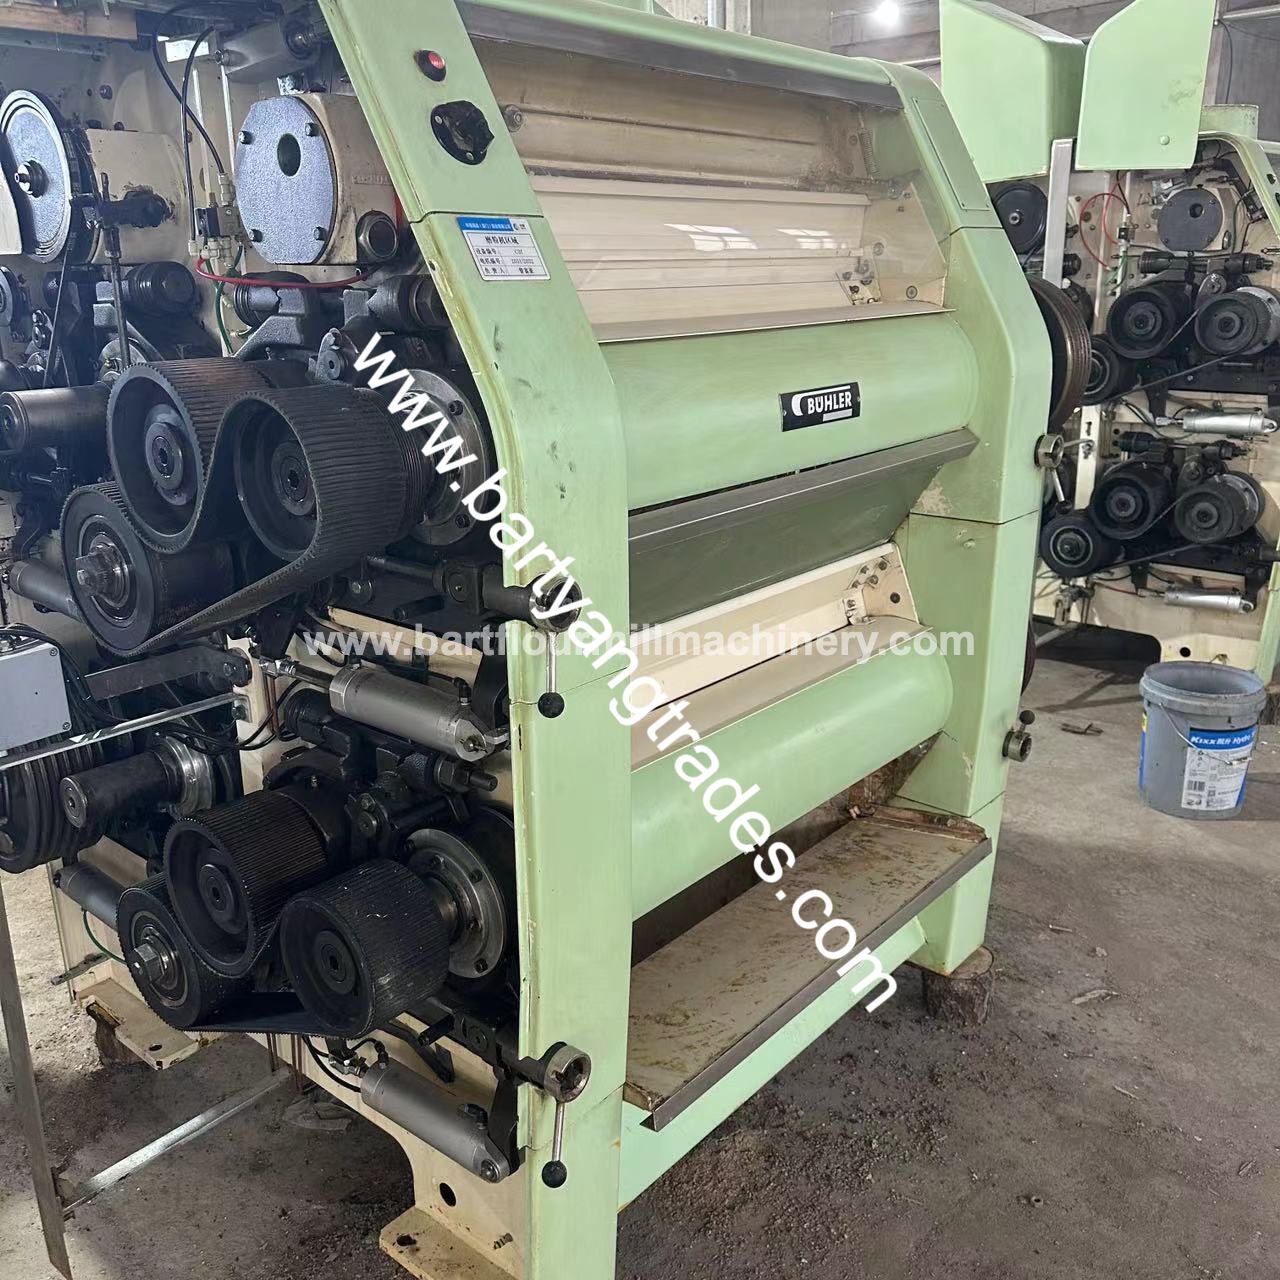 Overhauled Buhler flour mill machines